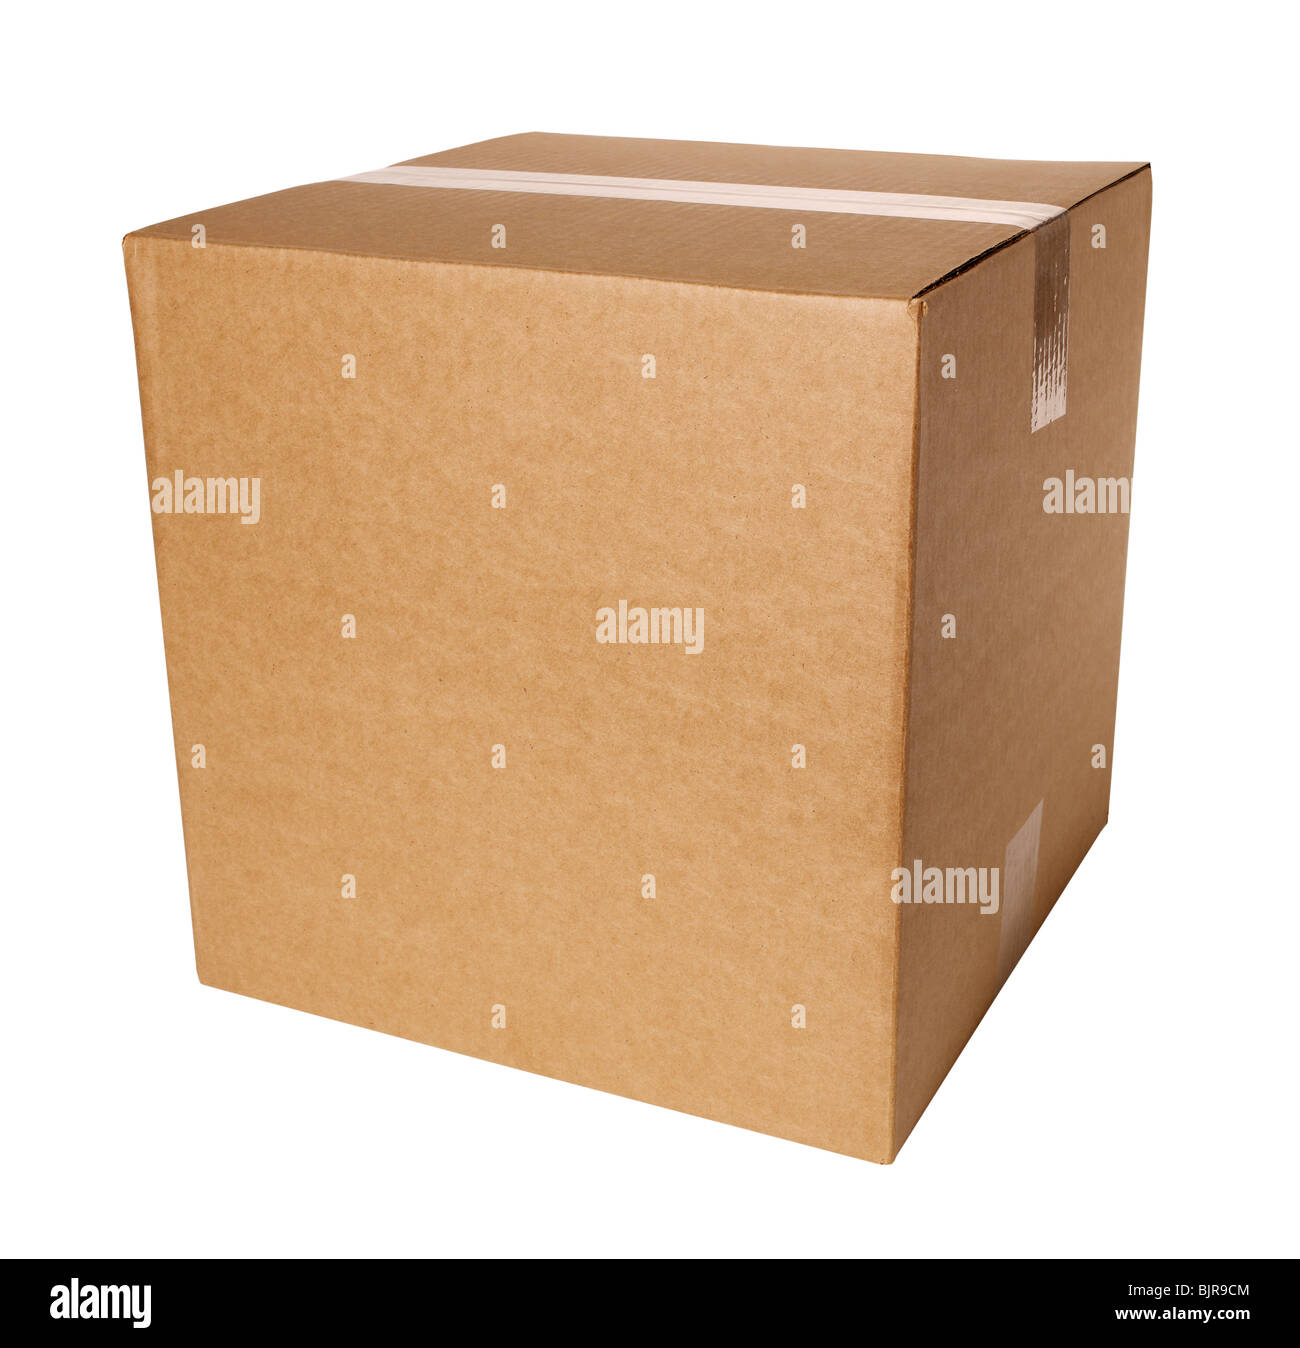 Caja contenedora de cartón marrón Foto de stock